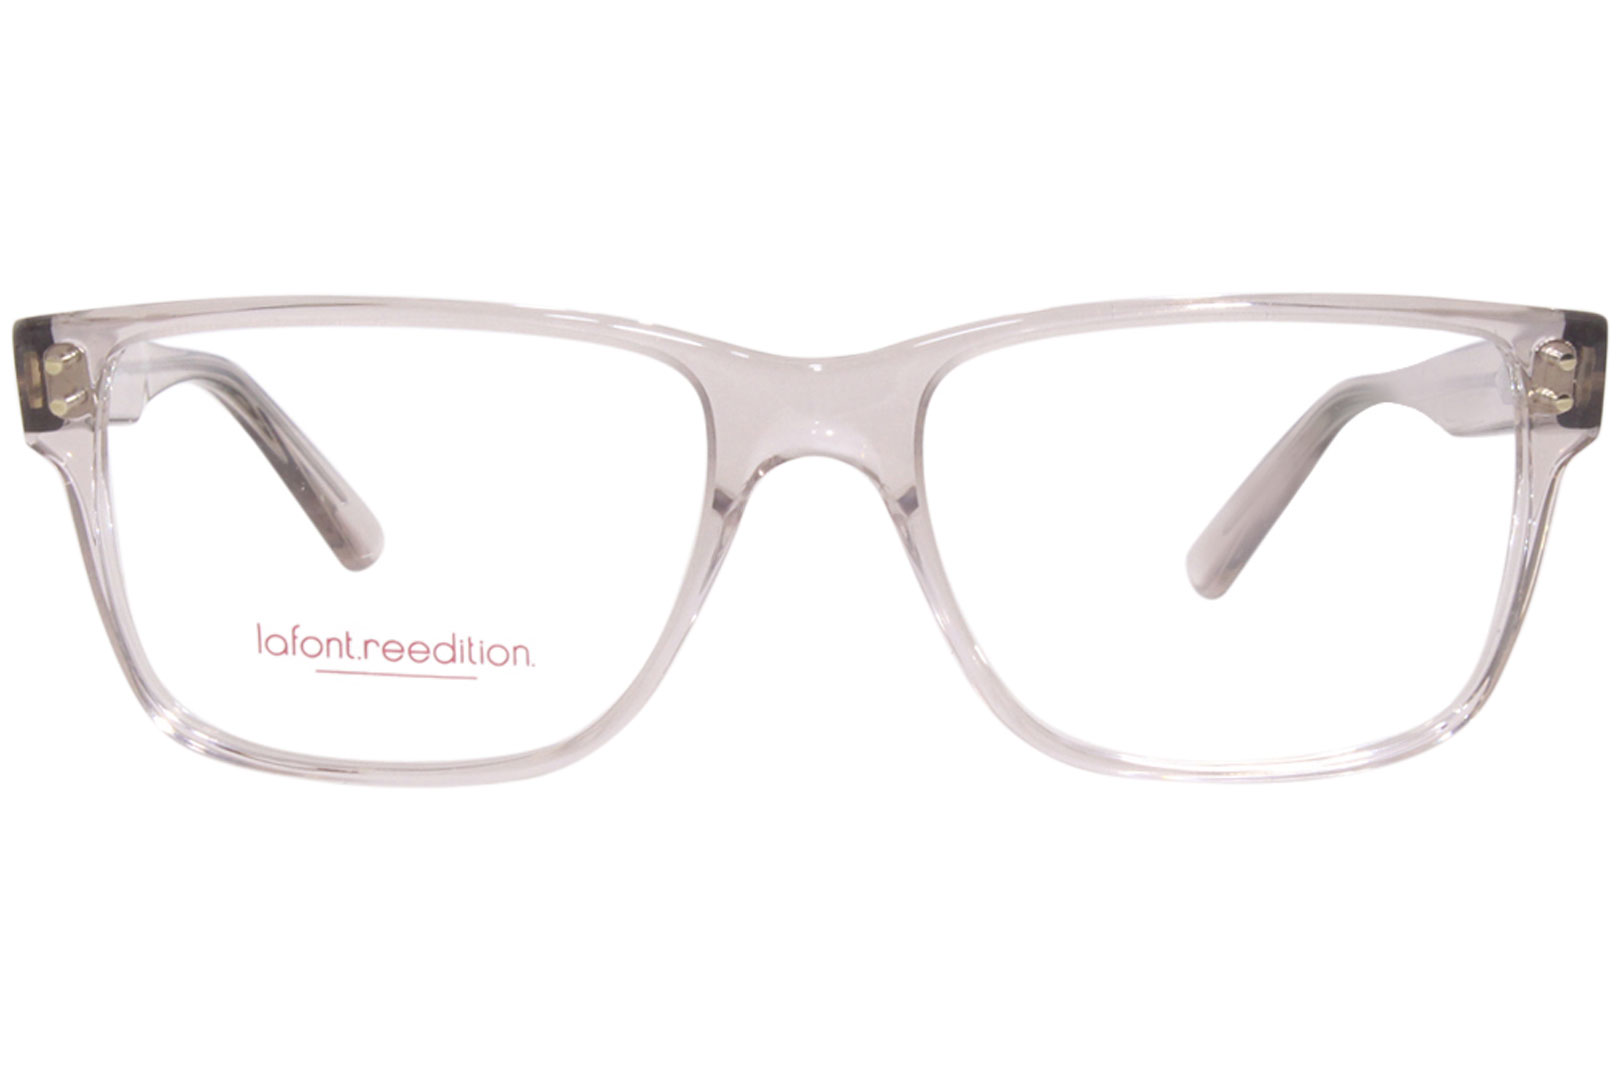 Lafont Reedition Jaipur Eyeglasses Men's Full Rim Rectangle Shape ...